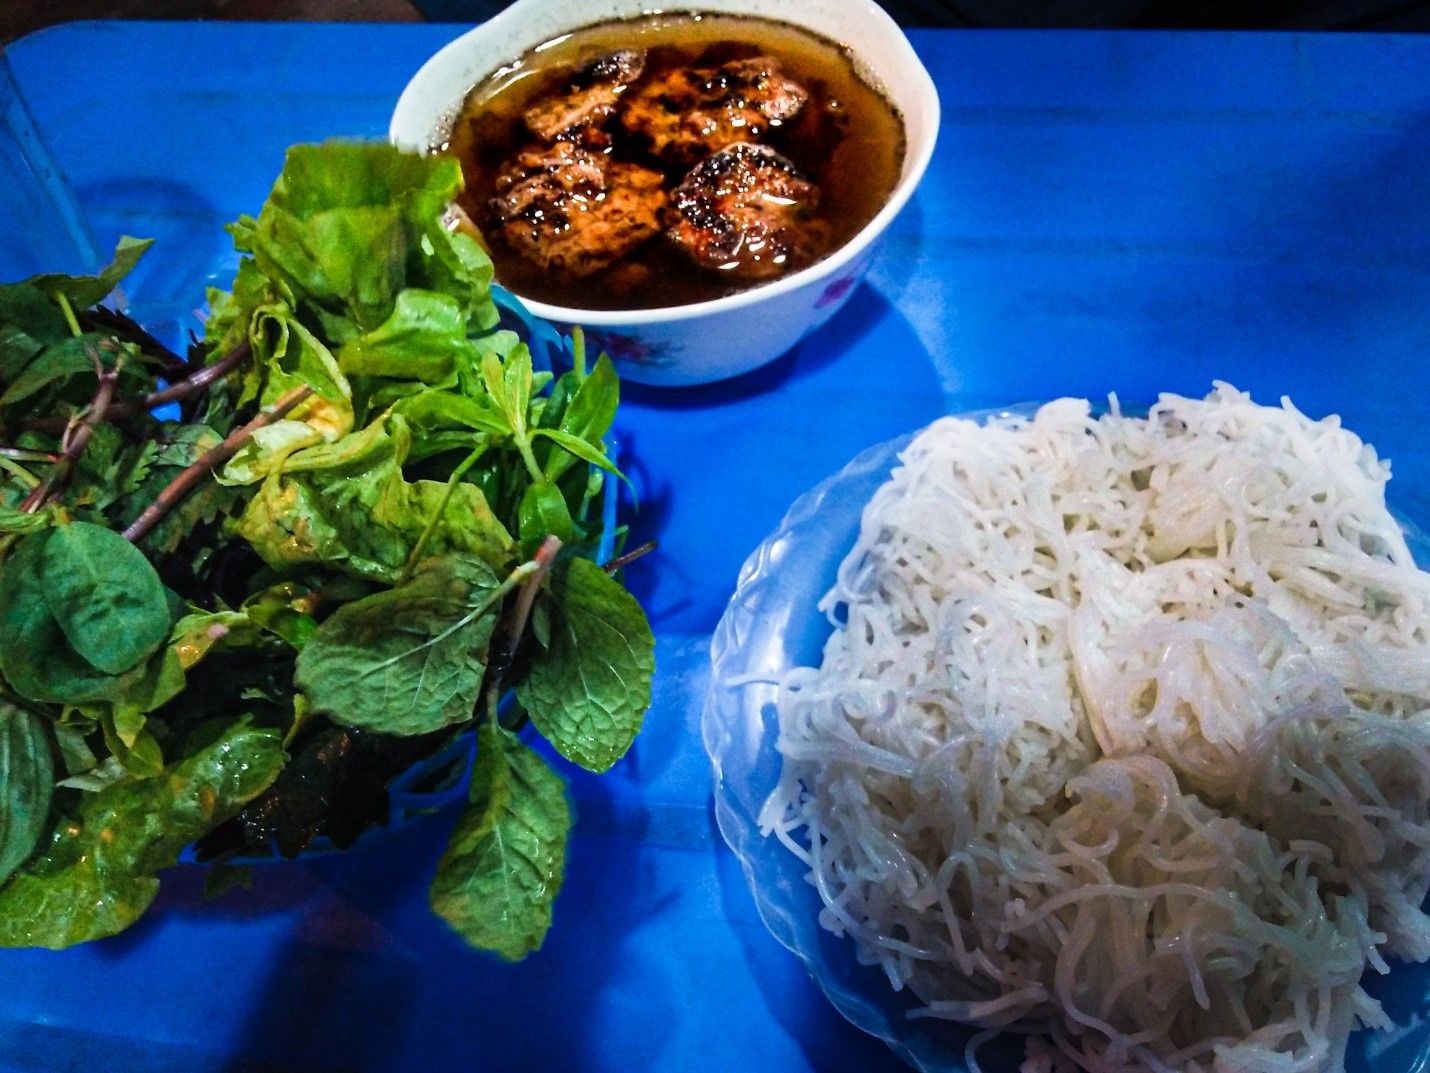 a local dish Bun Cha originated in Hanoi